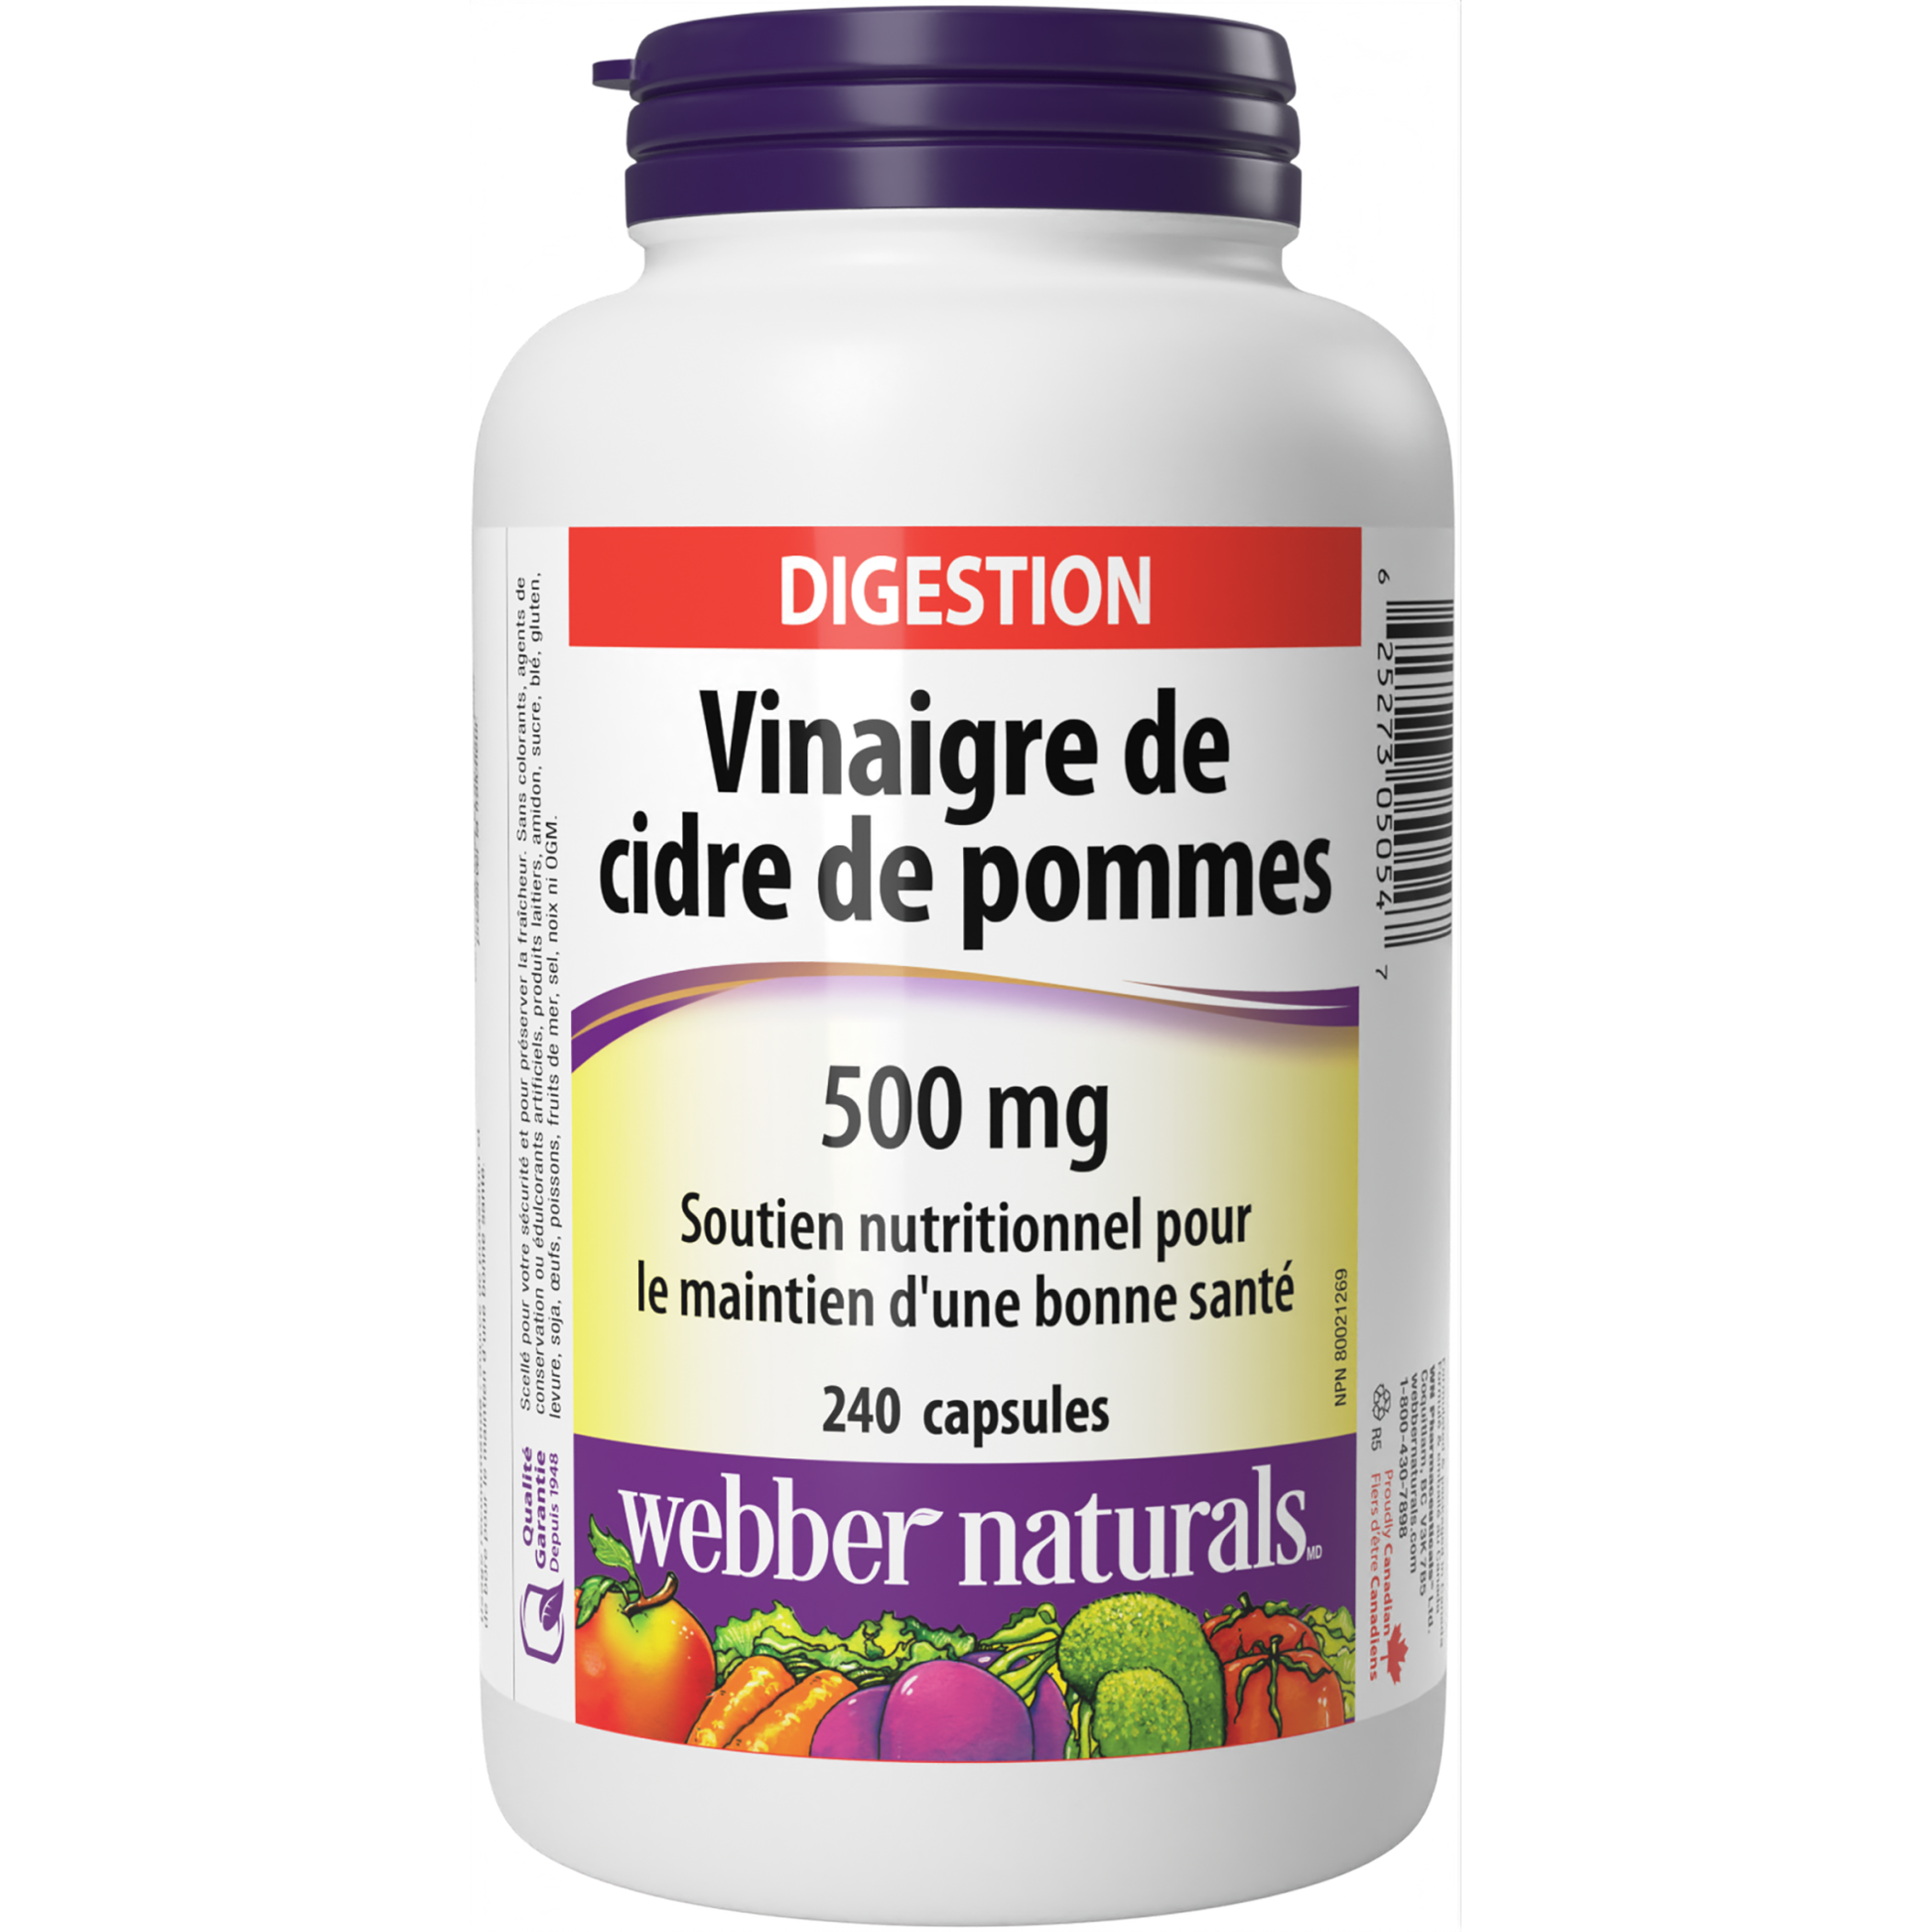 Vinaigre de cidre de pommes 500 mg for Webber Naturals|v|hi-res|WN5054